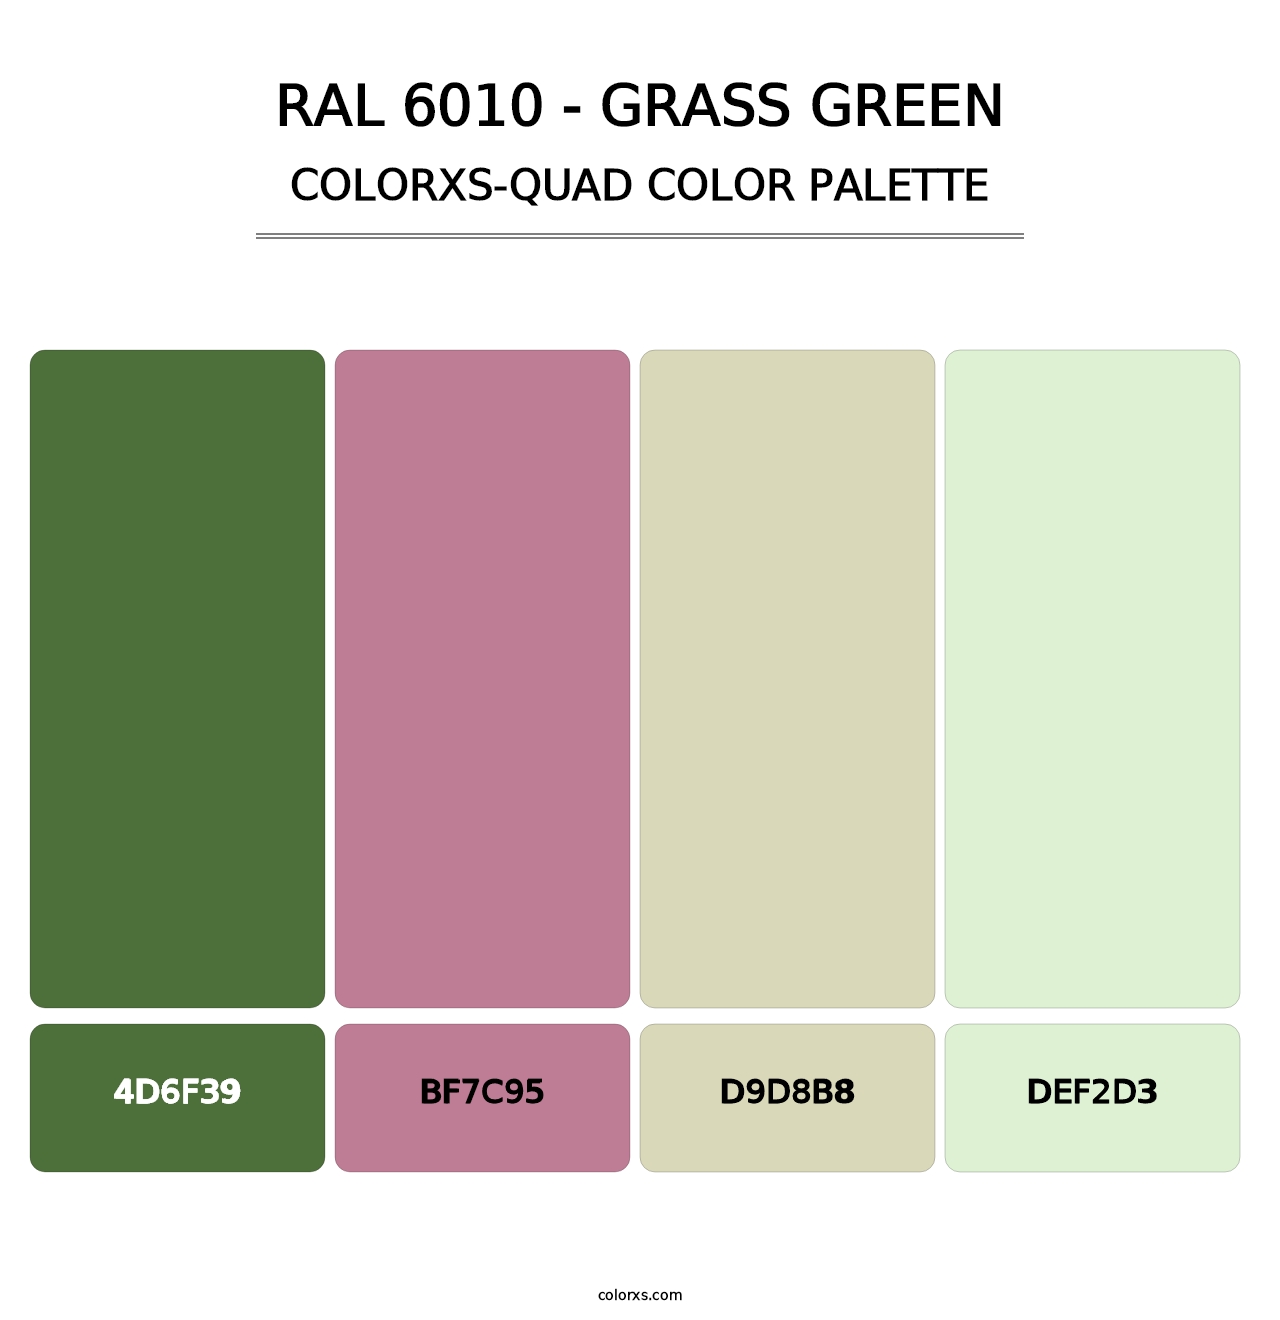 RAL 6010 - Grass Green - Colorxs Quad Palette